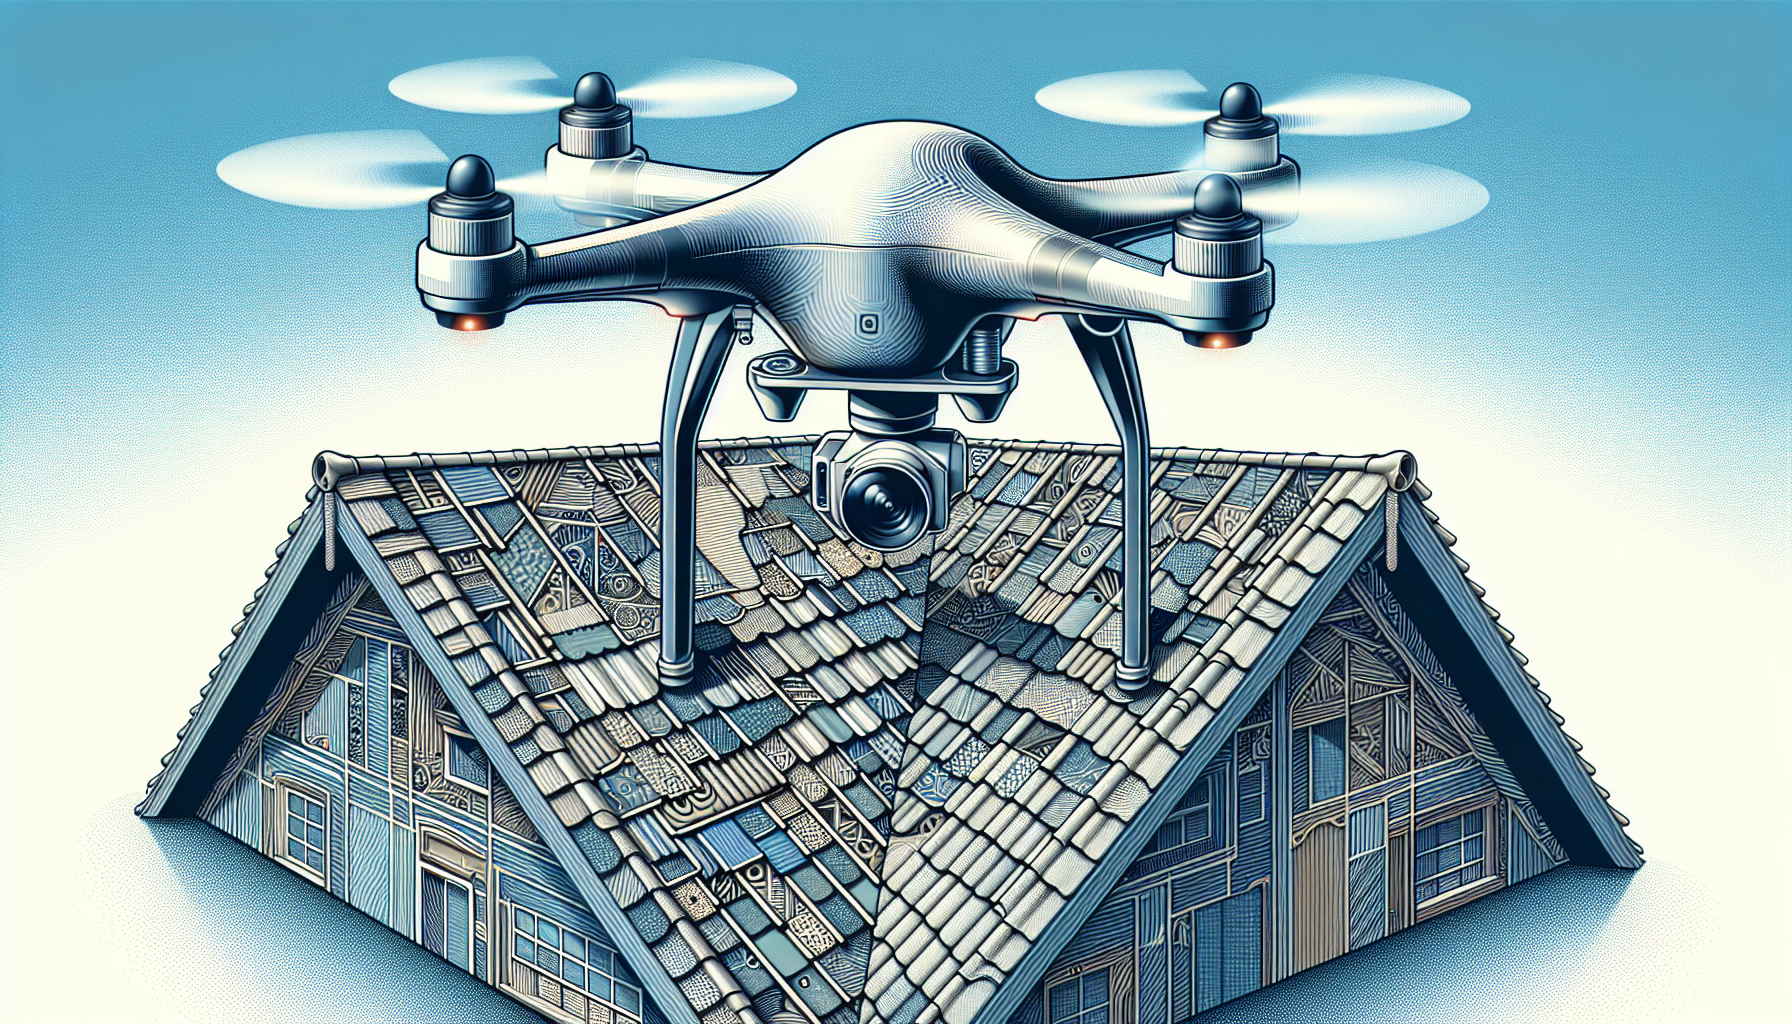 Drone roof inspection in progress